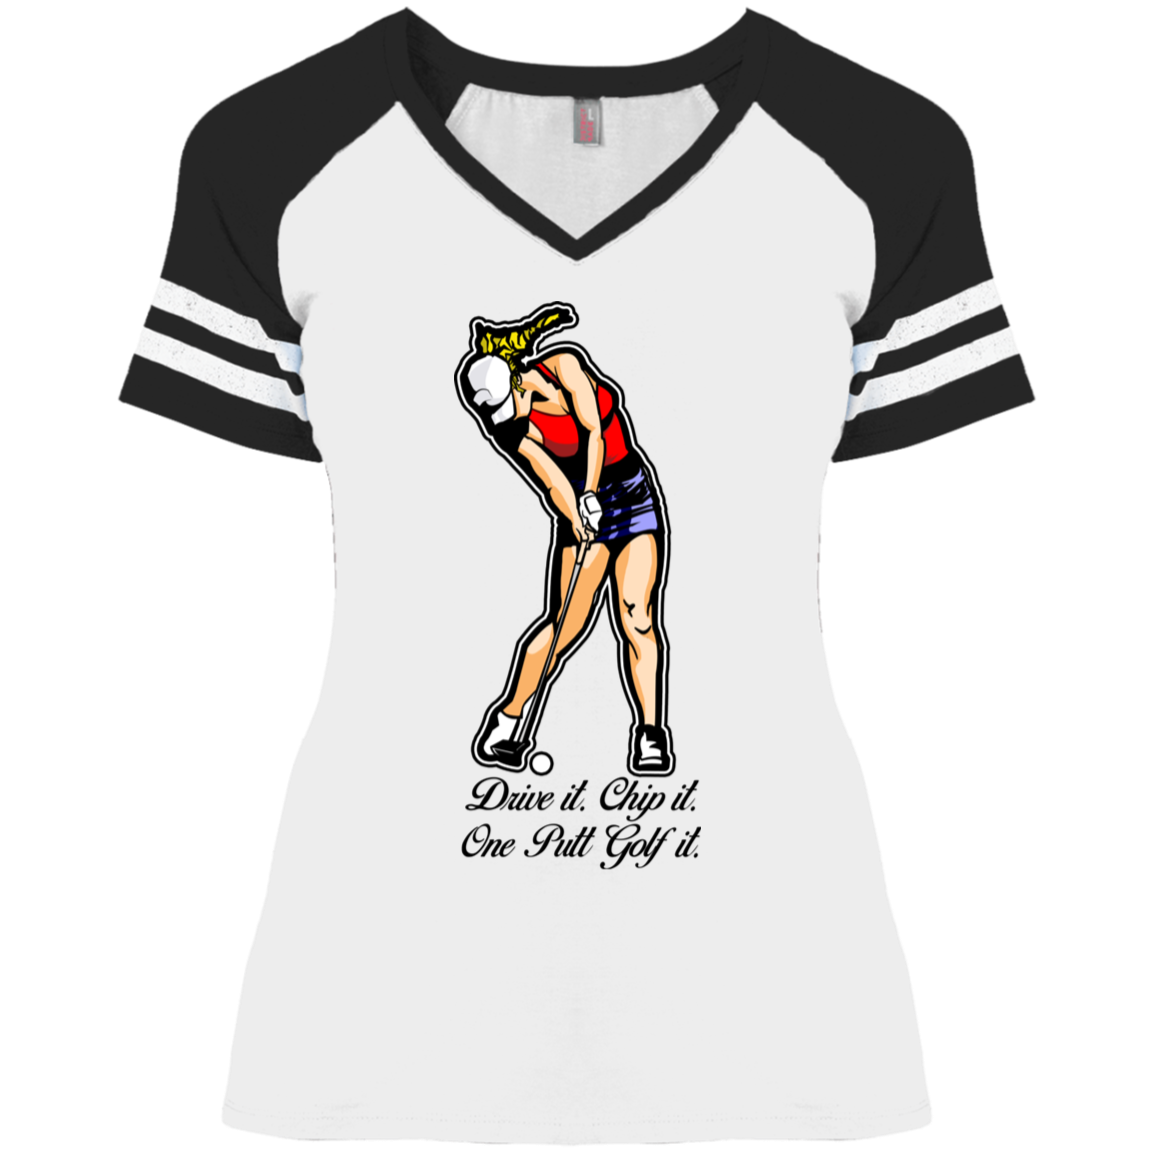 OPG Custom Design #9. Drive it. Chip it. One Putt Golf It. Golf So. Cal. Ladies' Game V-Neck T-Shirt